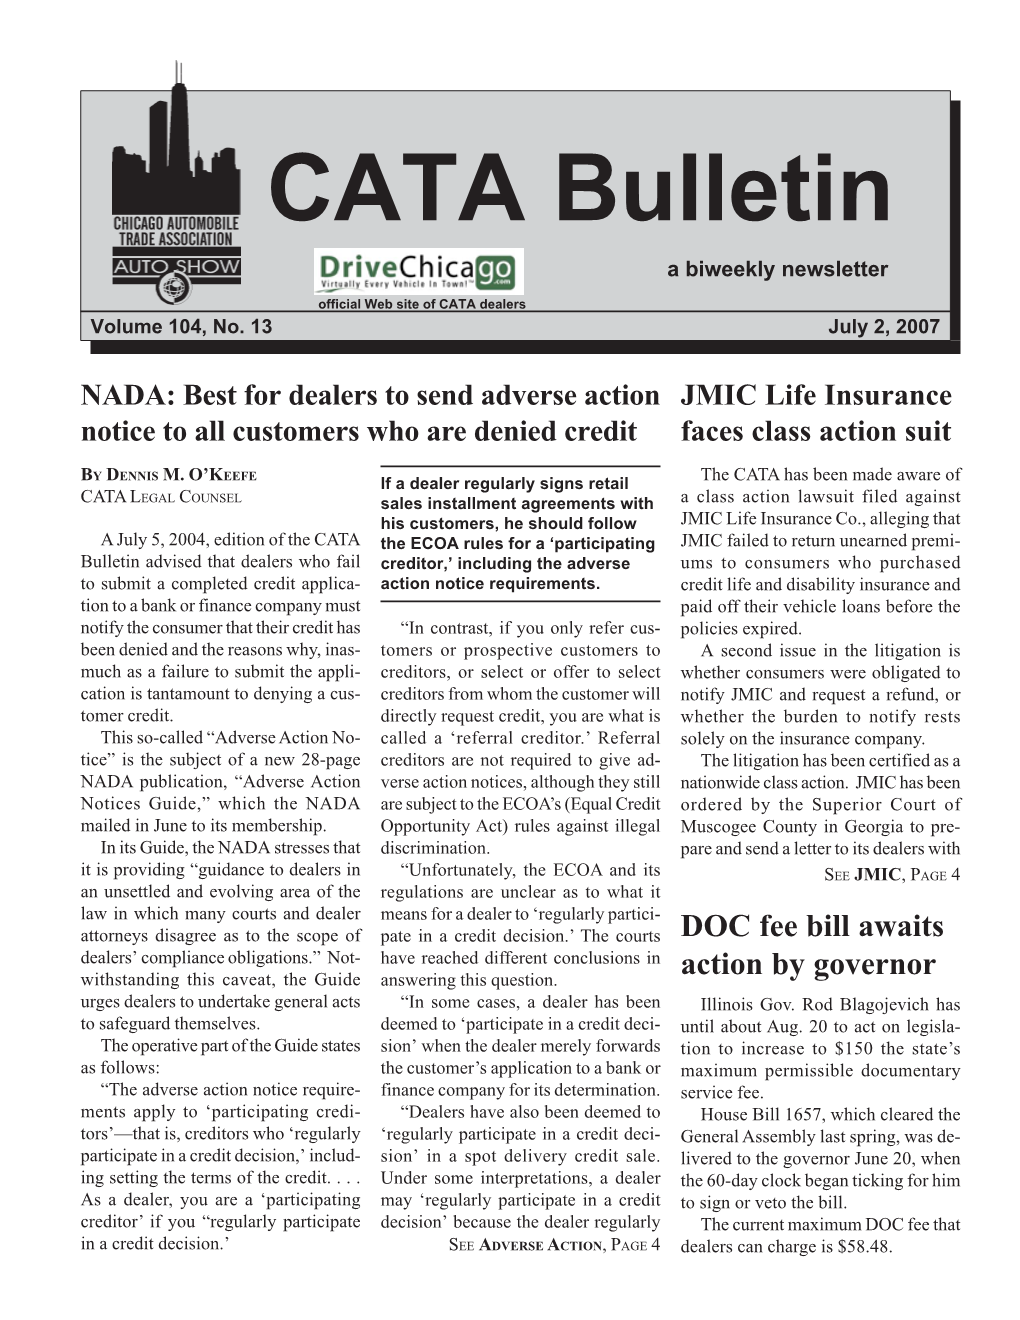 CATA Bulletin a Biweekly Newsletter